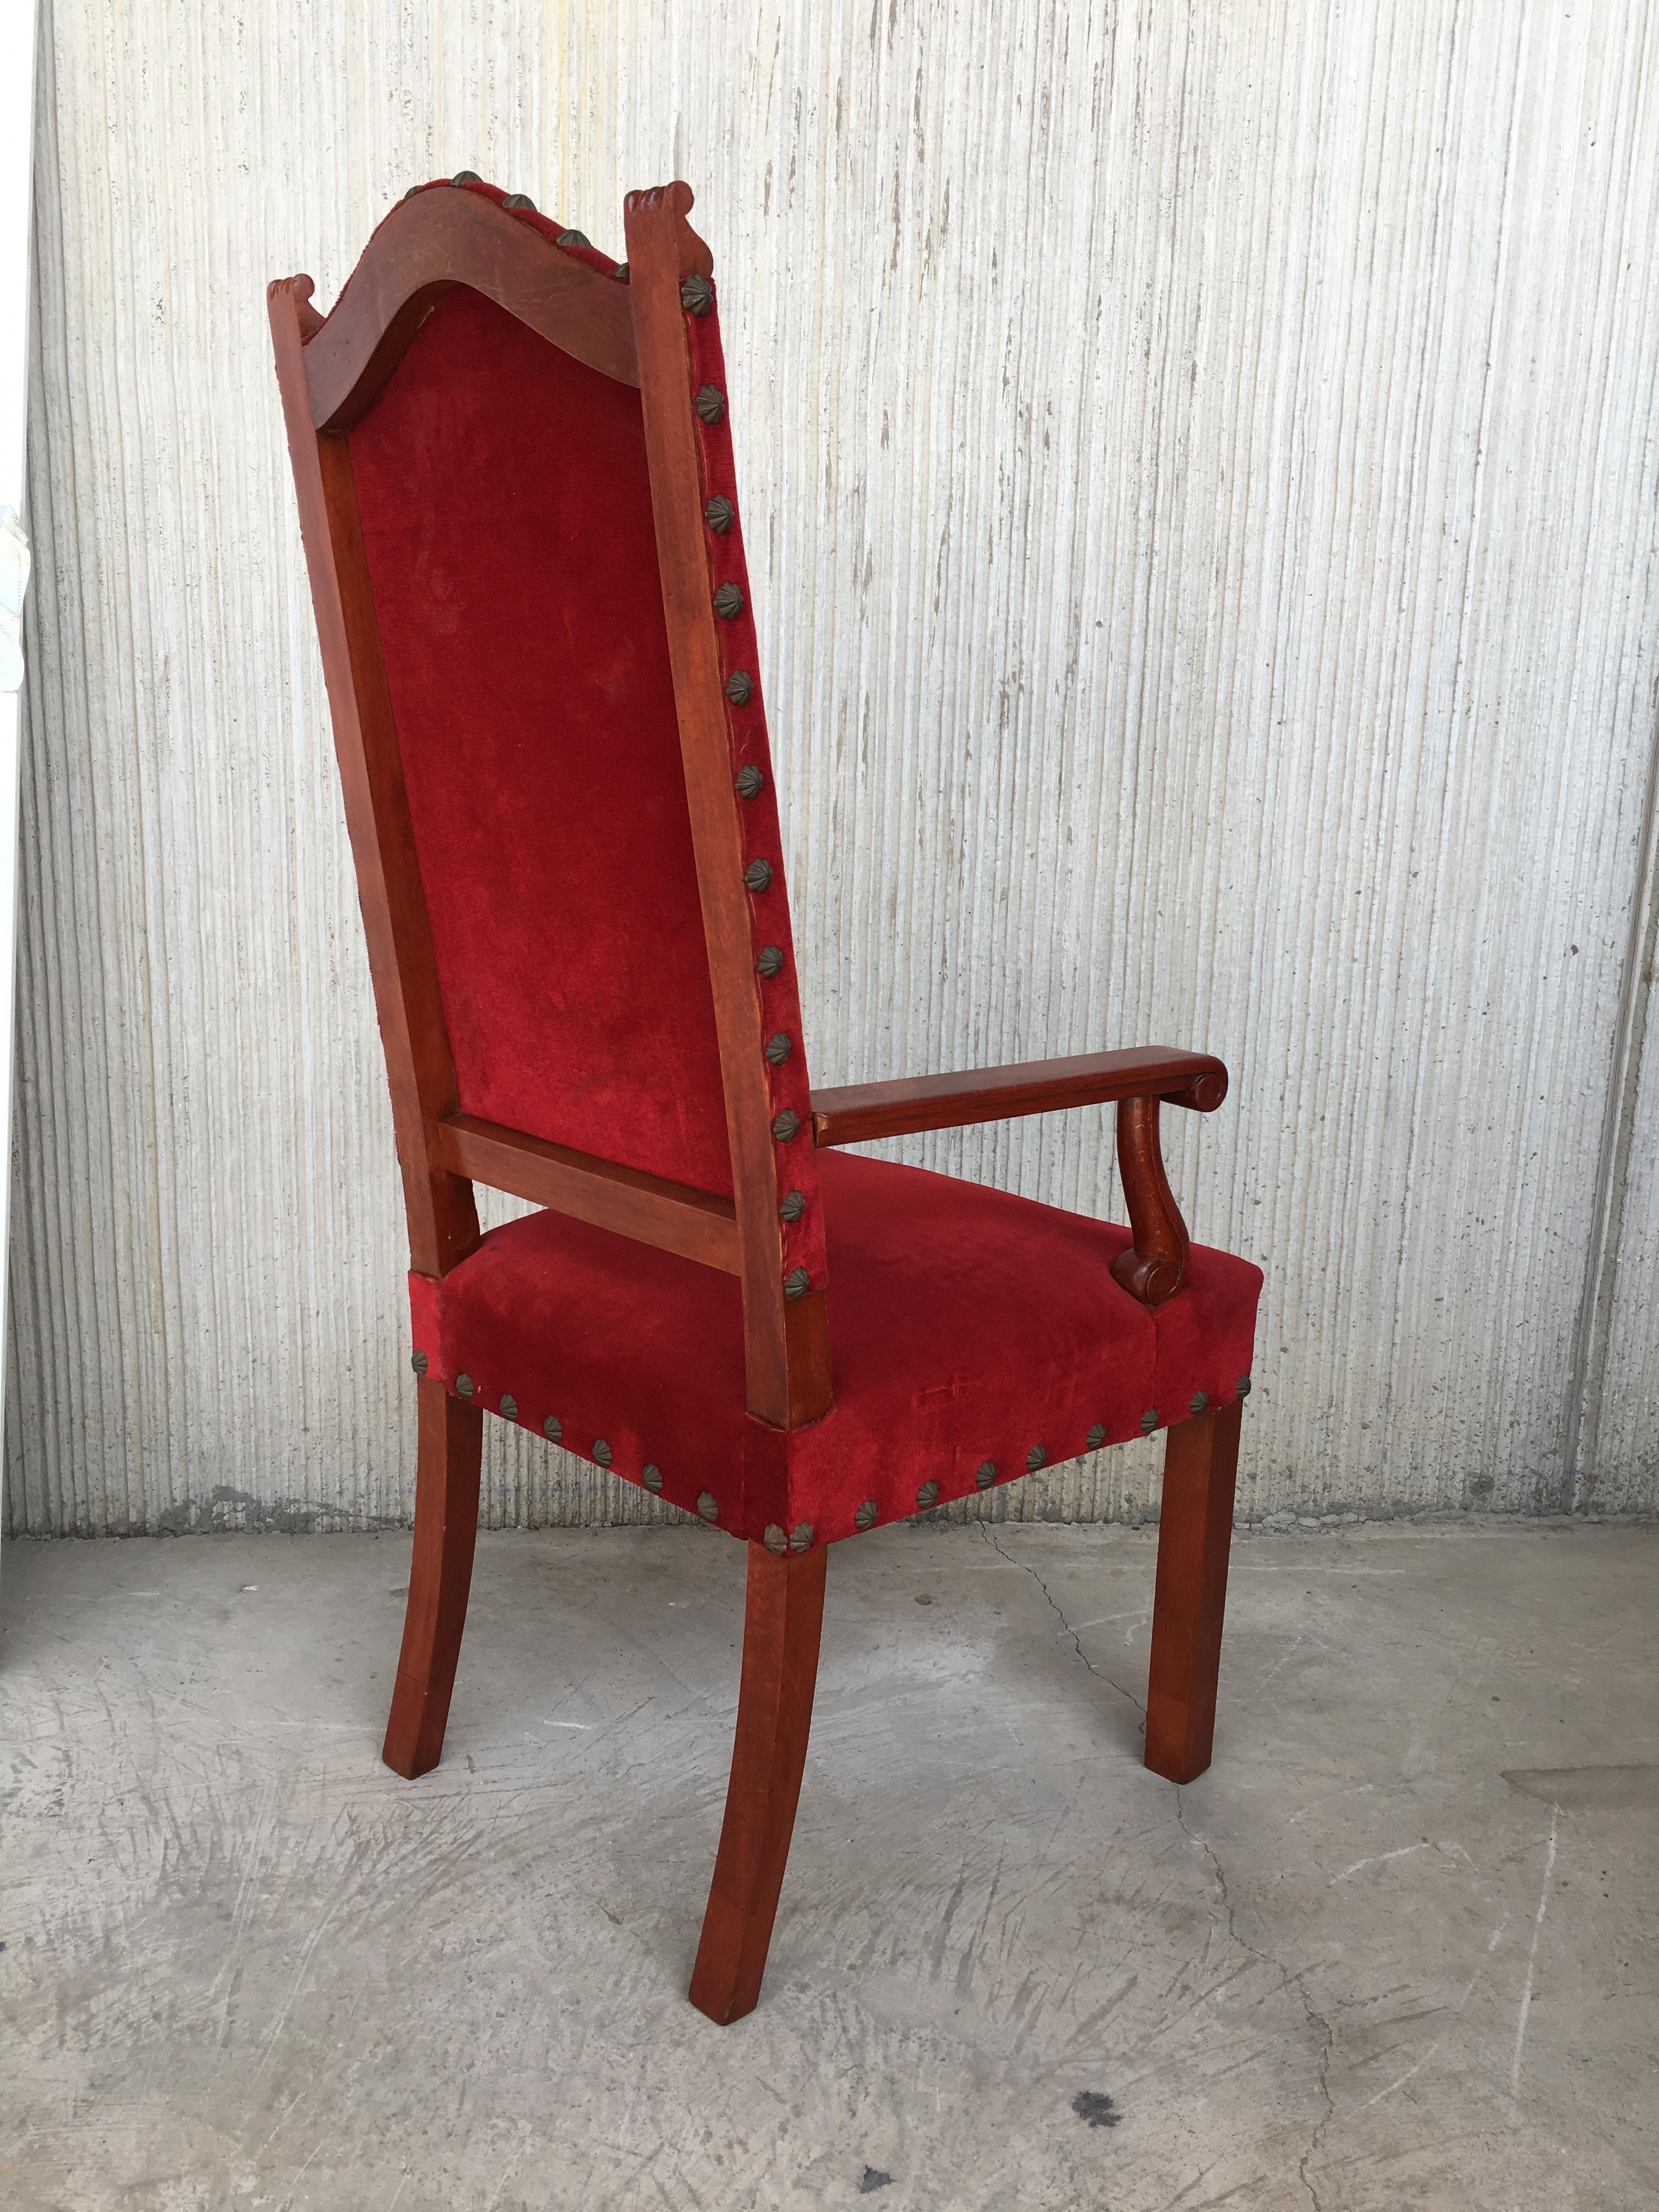 19th century Spanish revival high back armchair with red velvet upholstery.